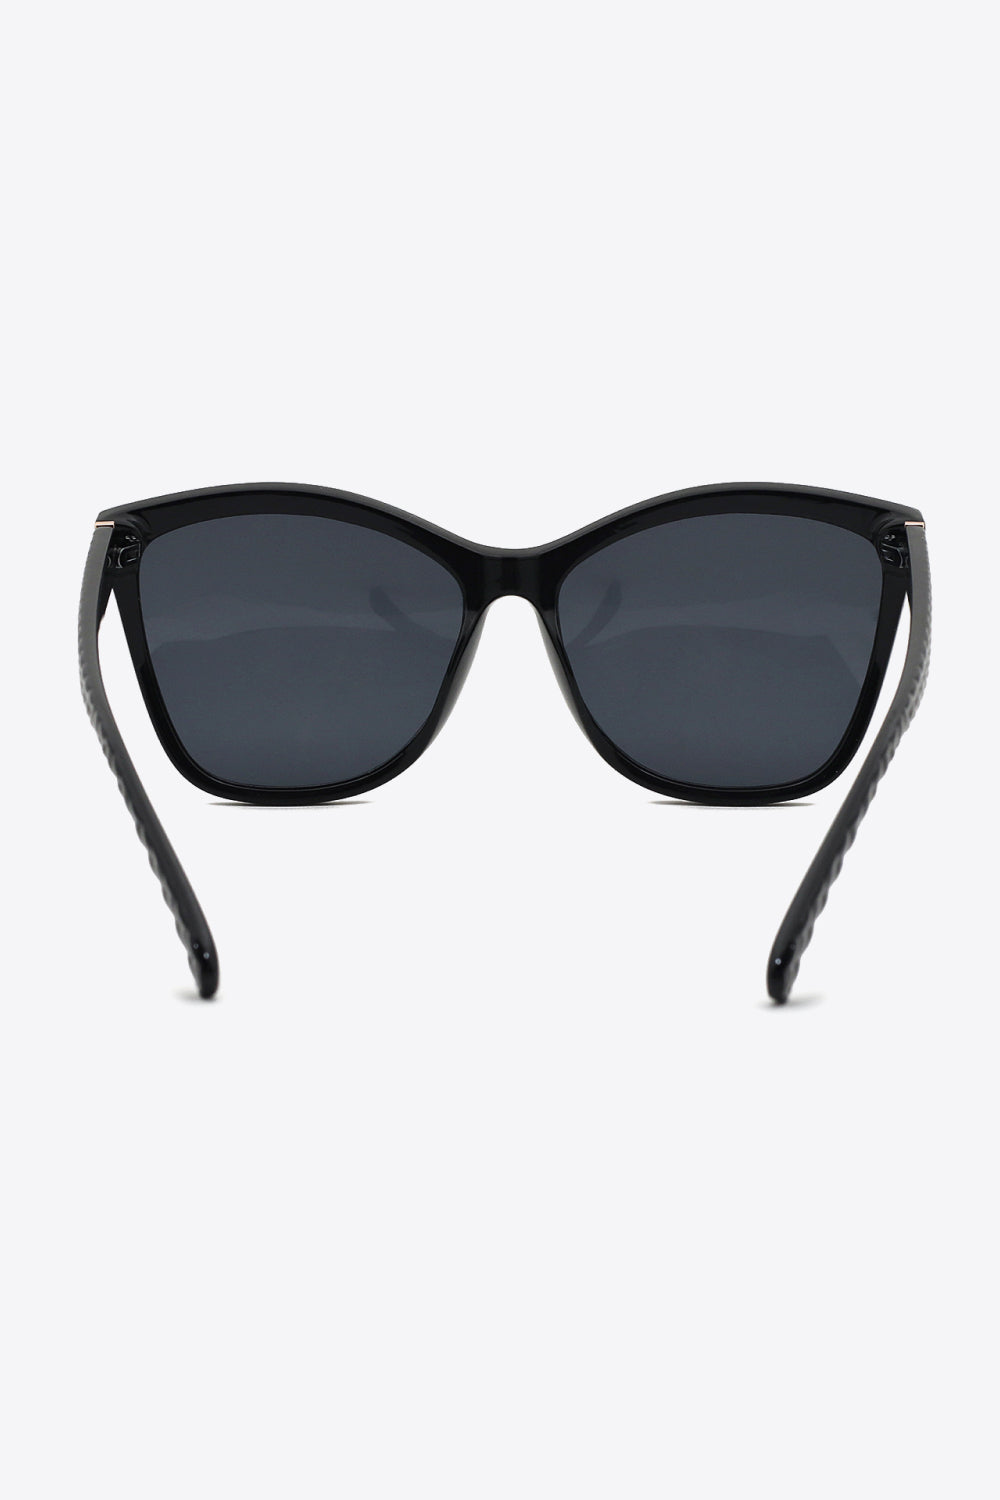 Uylee's Boutique Full Rim Polycarbonate Sunglasses